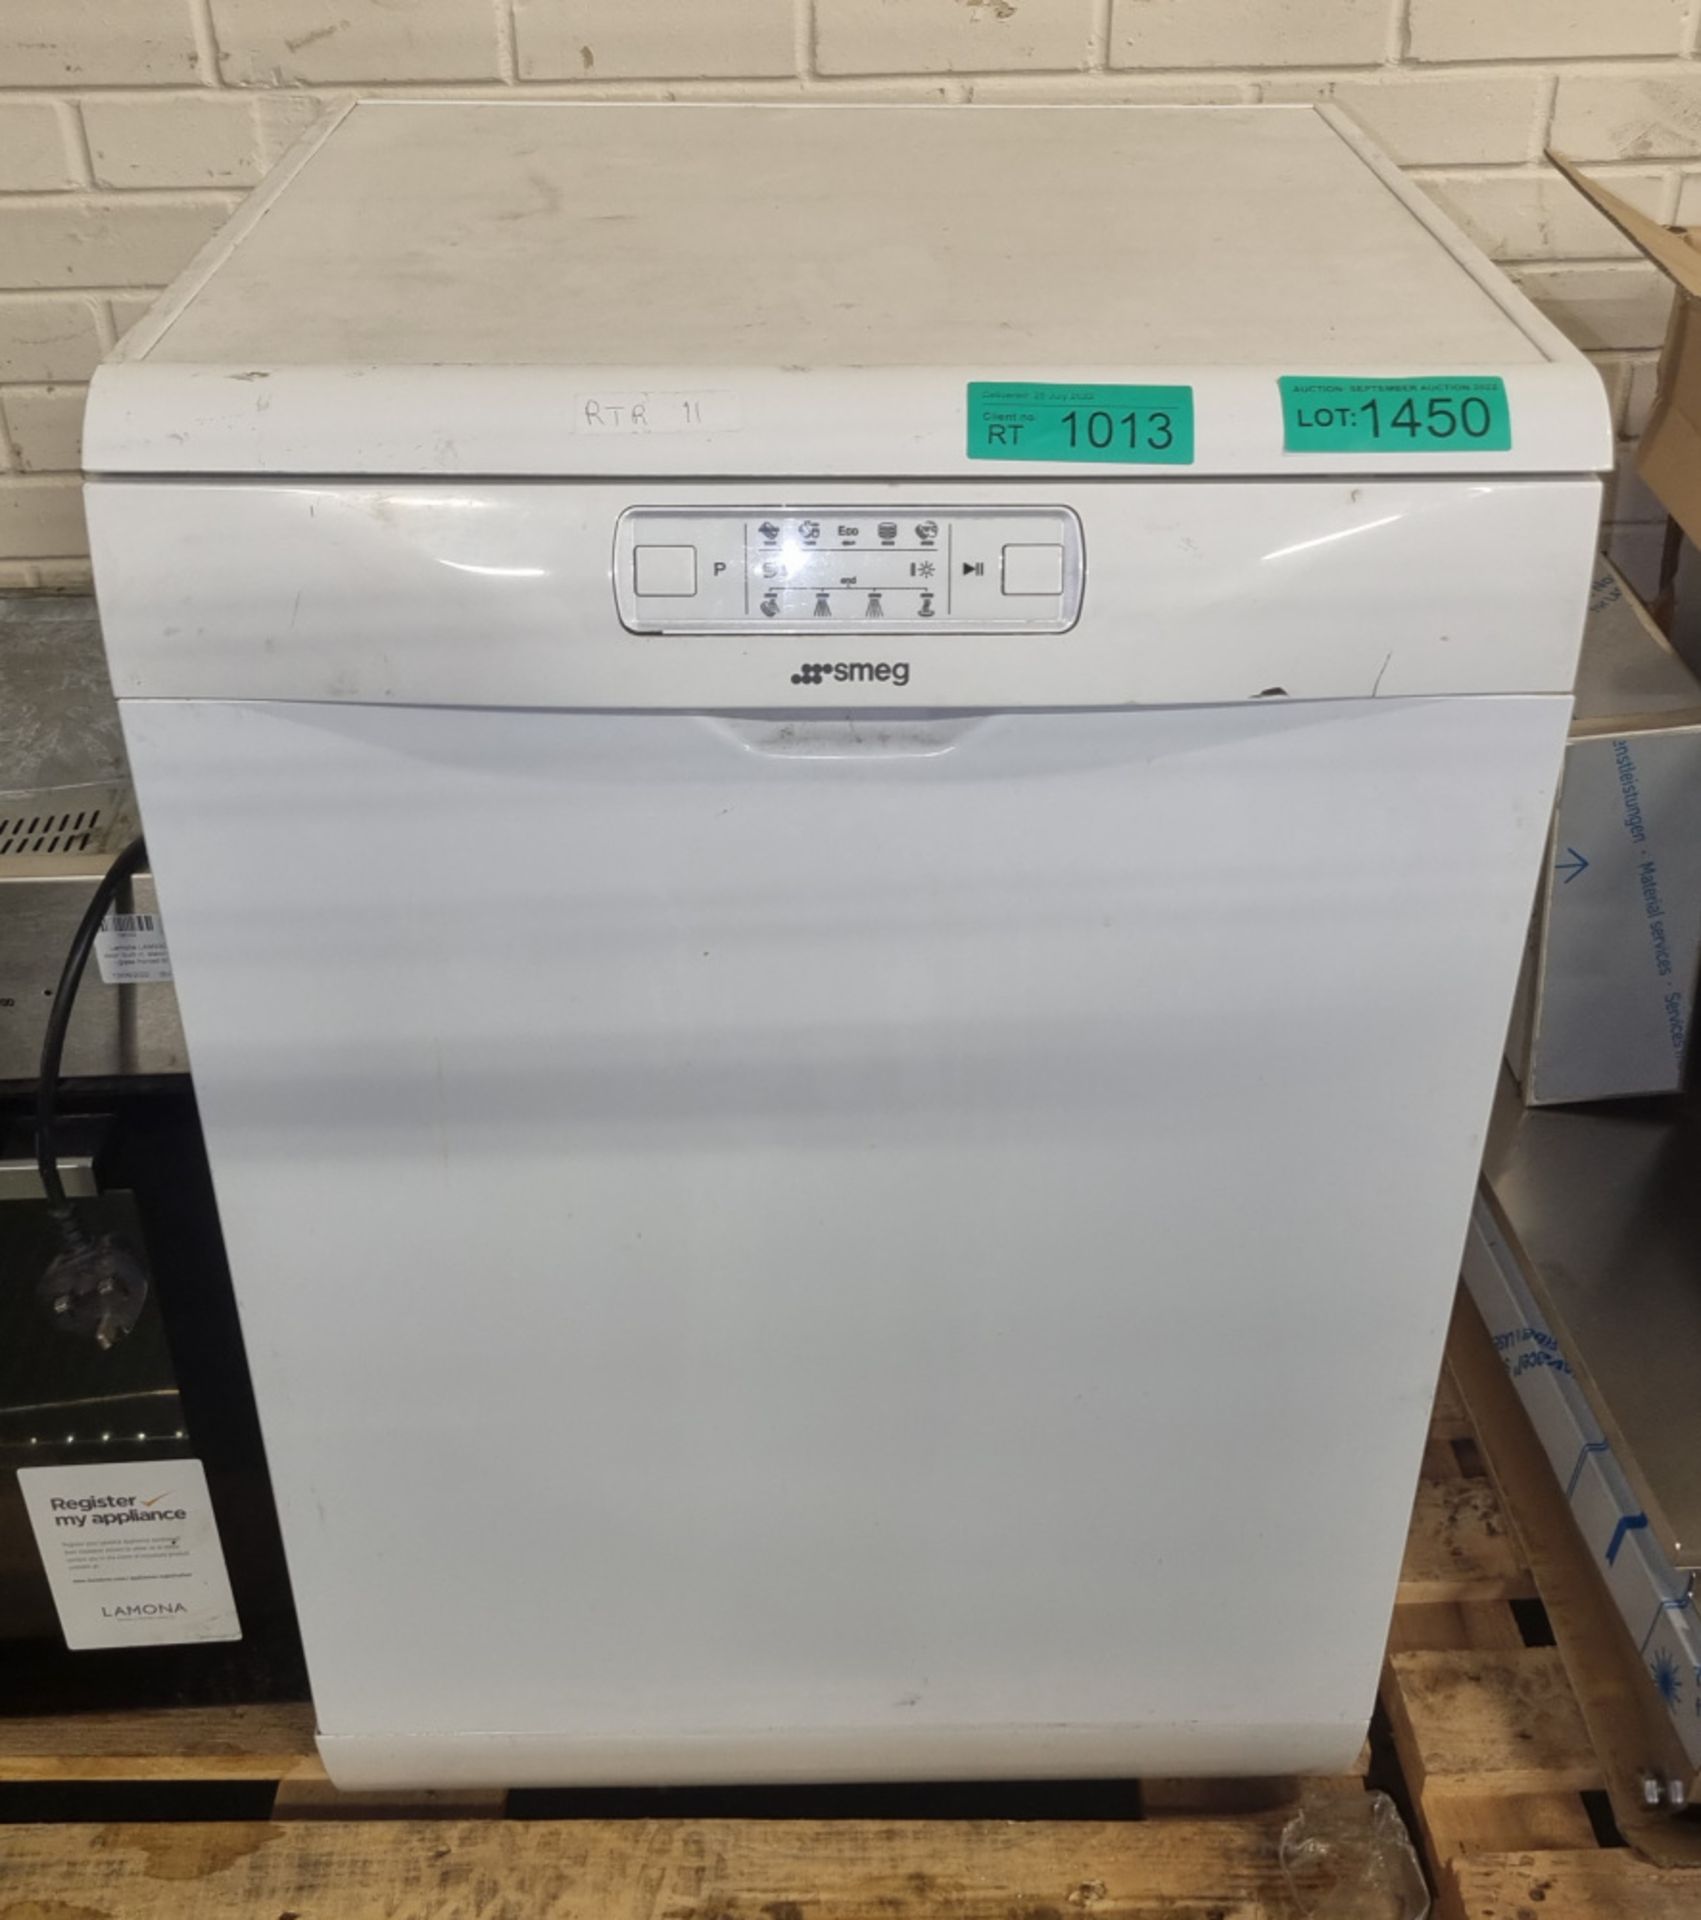 Smeg Dishwasher - L600 x D600 x H850mm